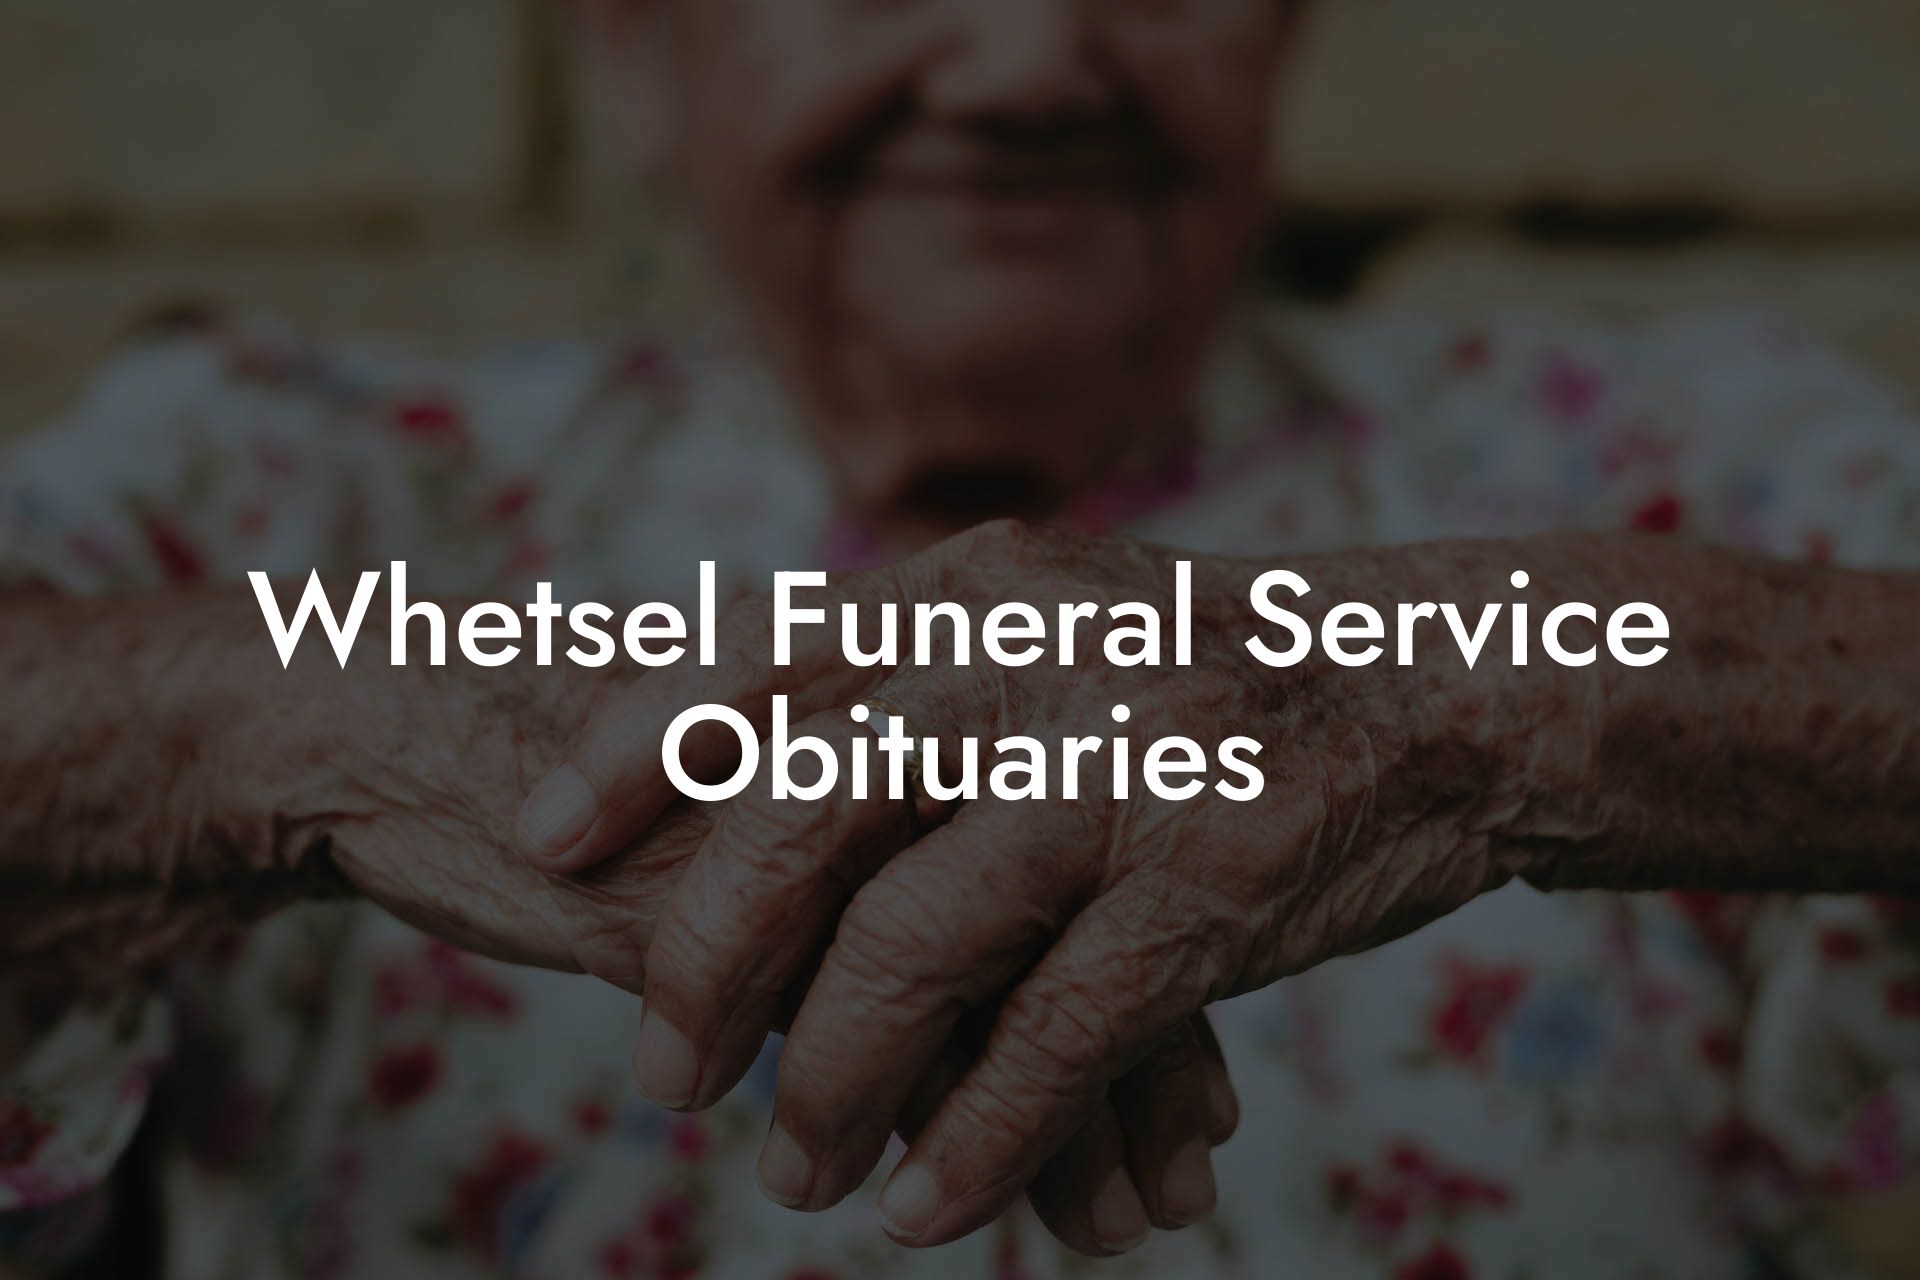 Whetsel Funeral Service Obituaries